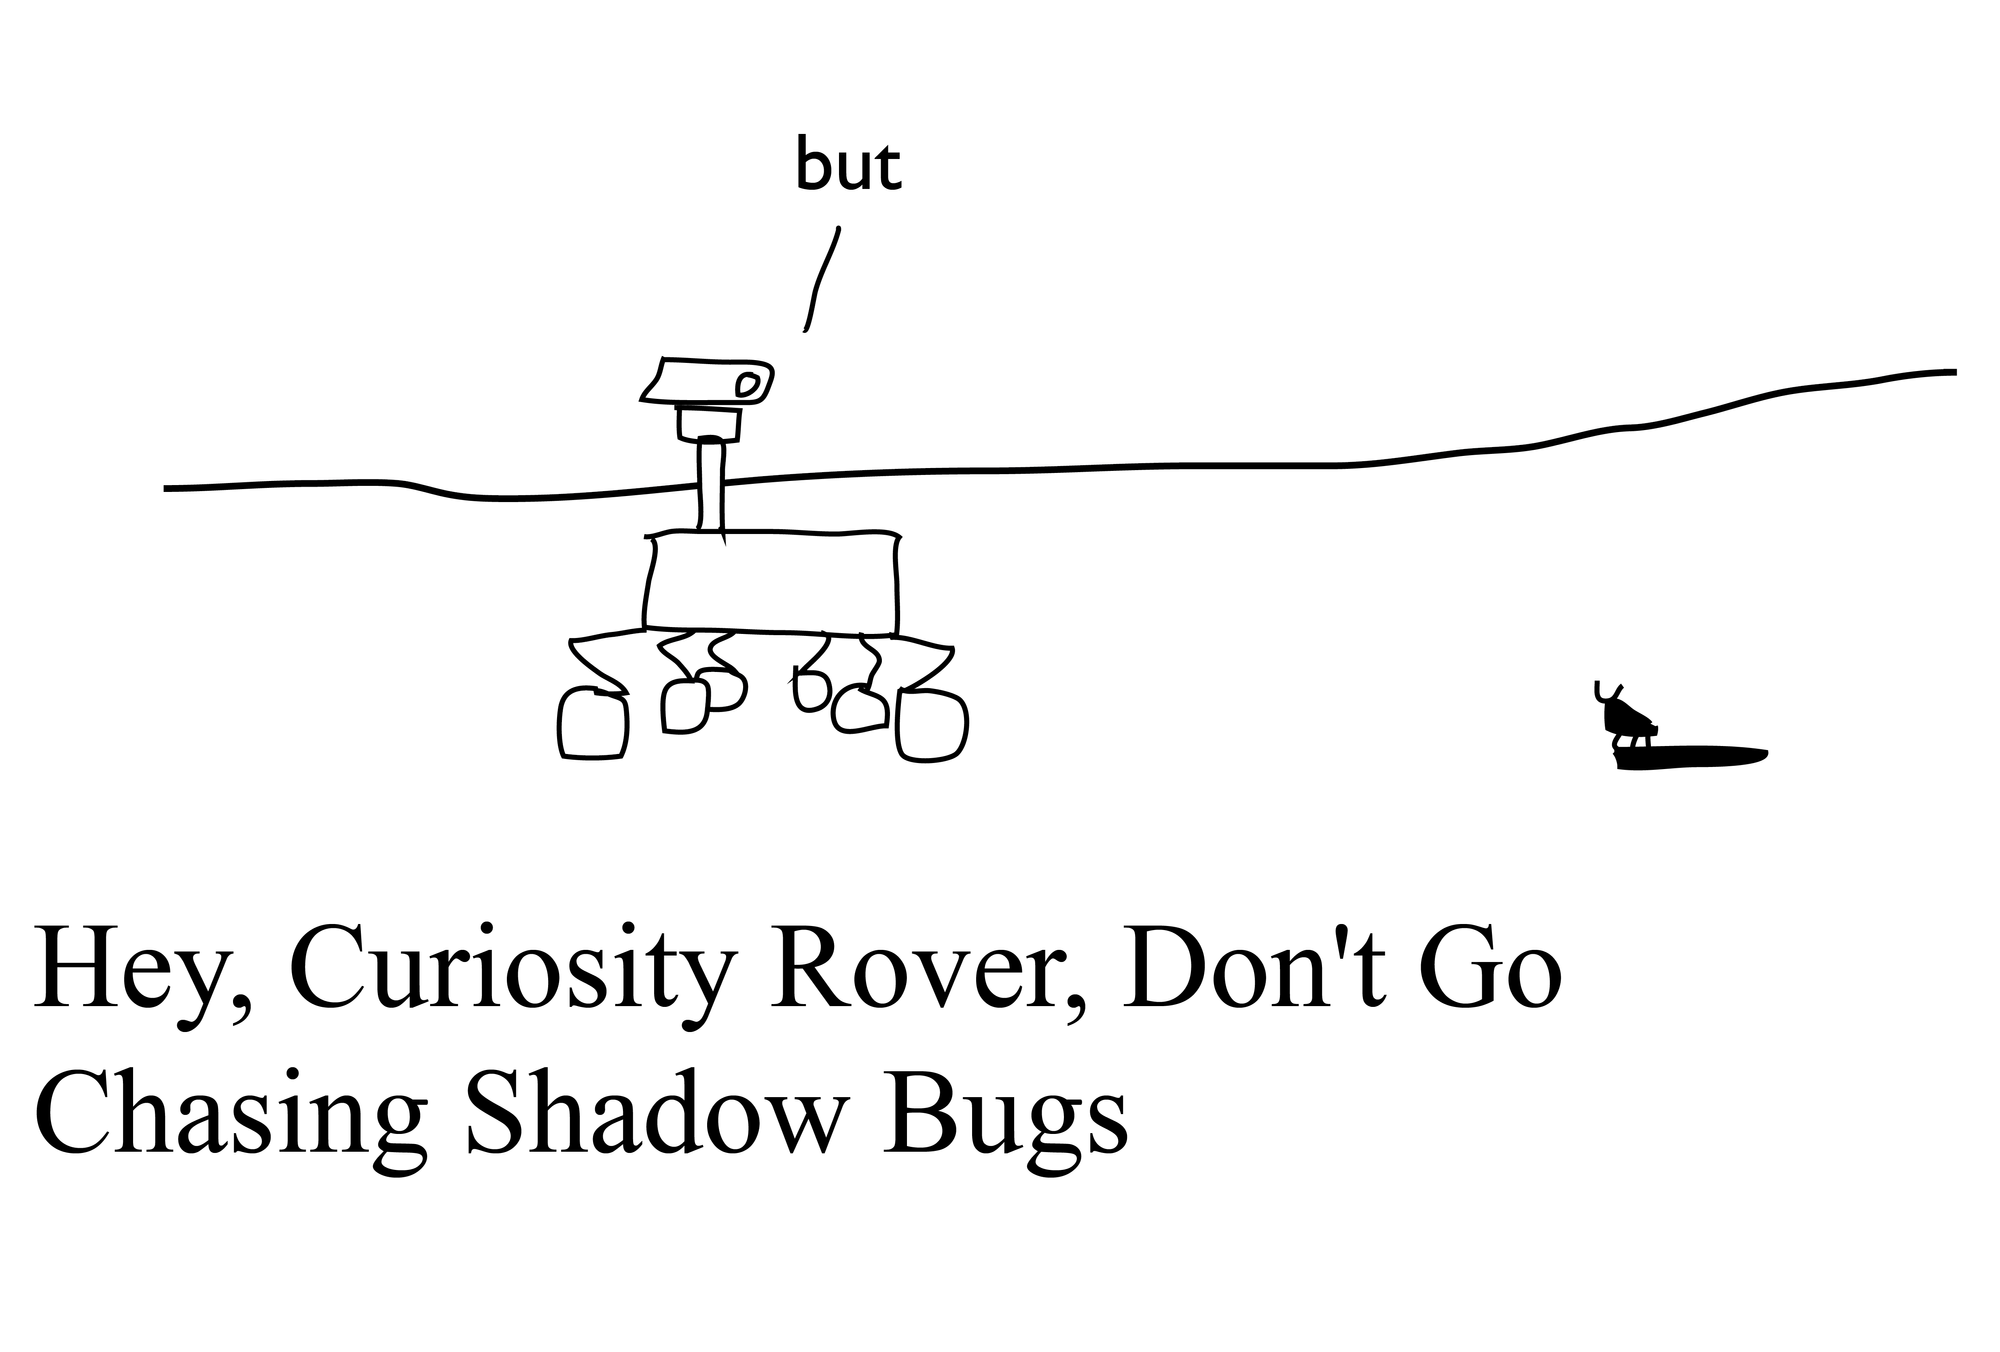 Hey, Curiosity Rover, Don't Go Chasing Shadow Bugs